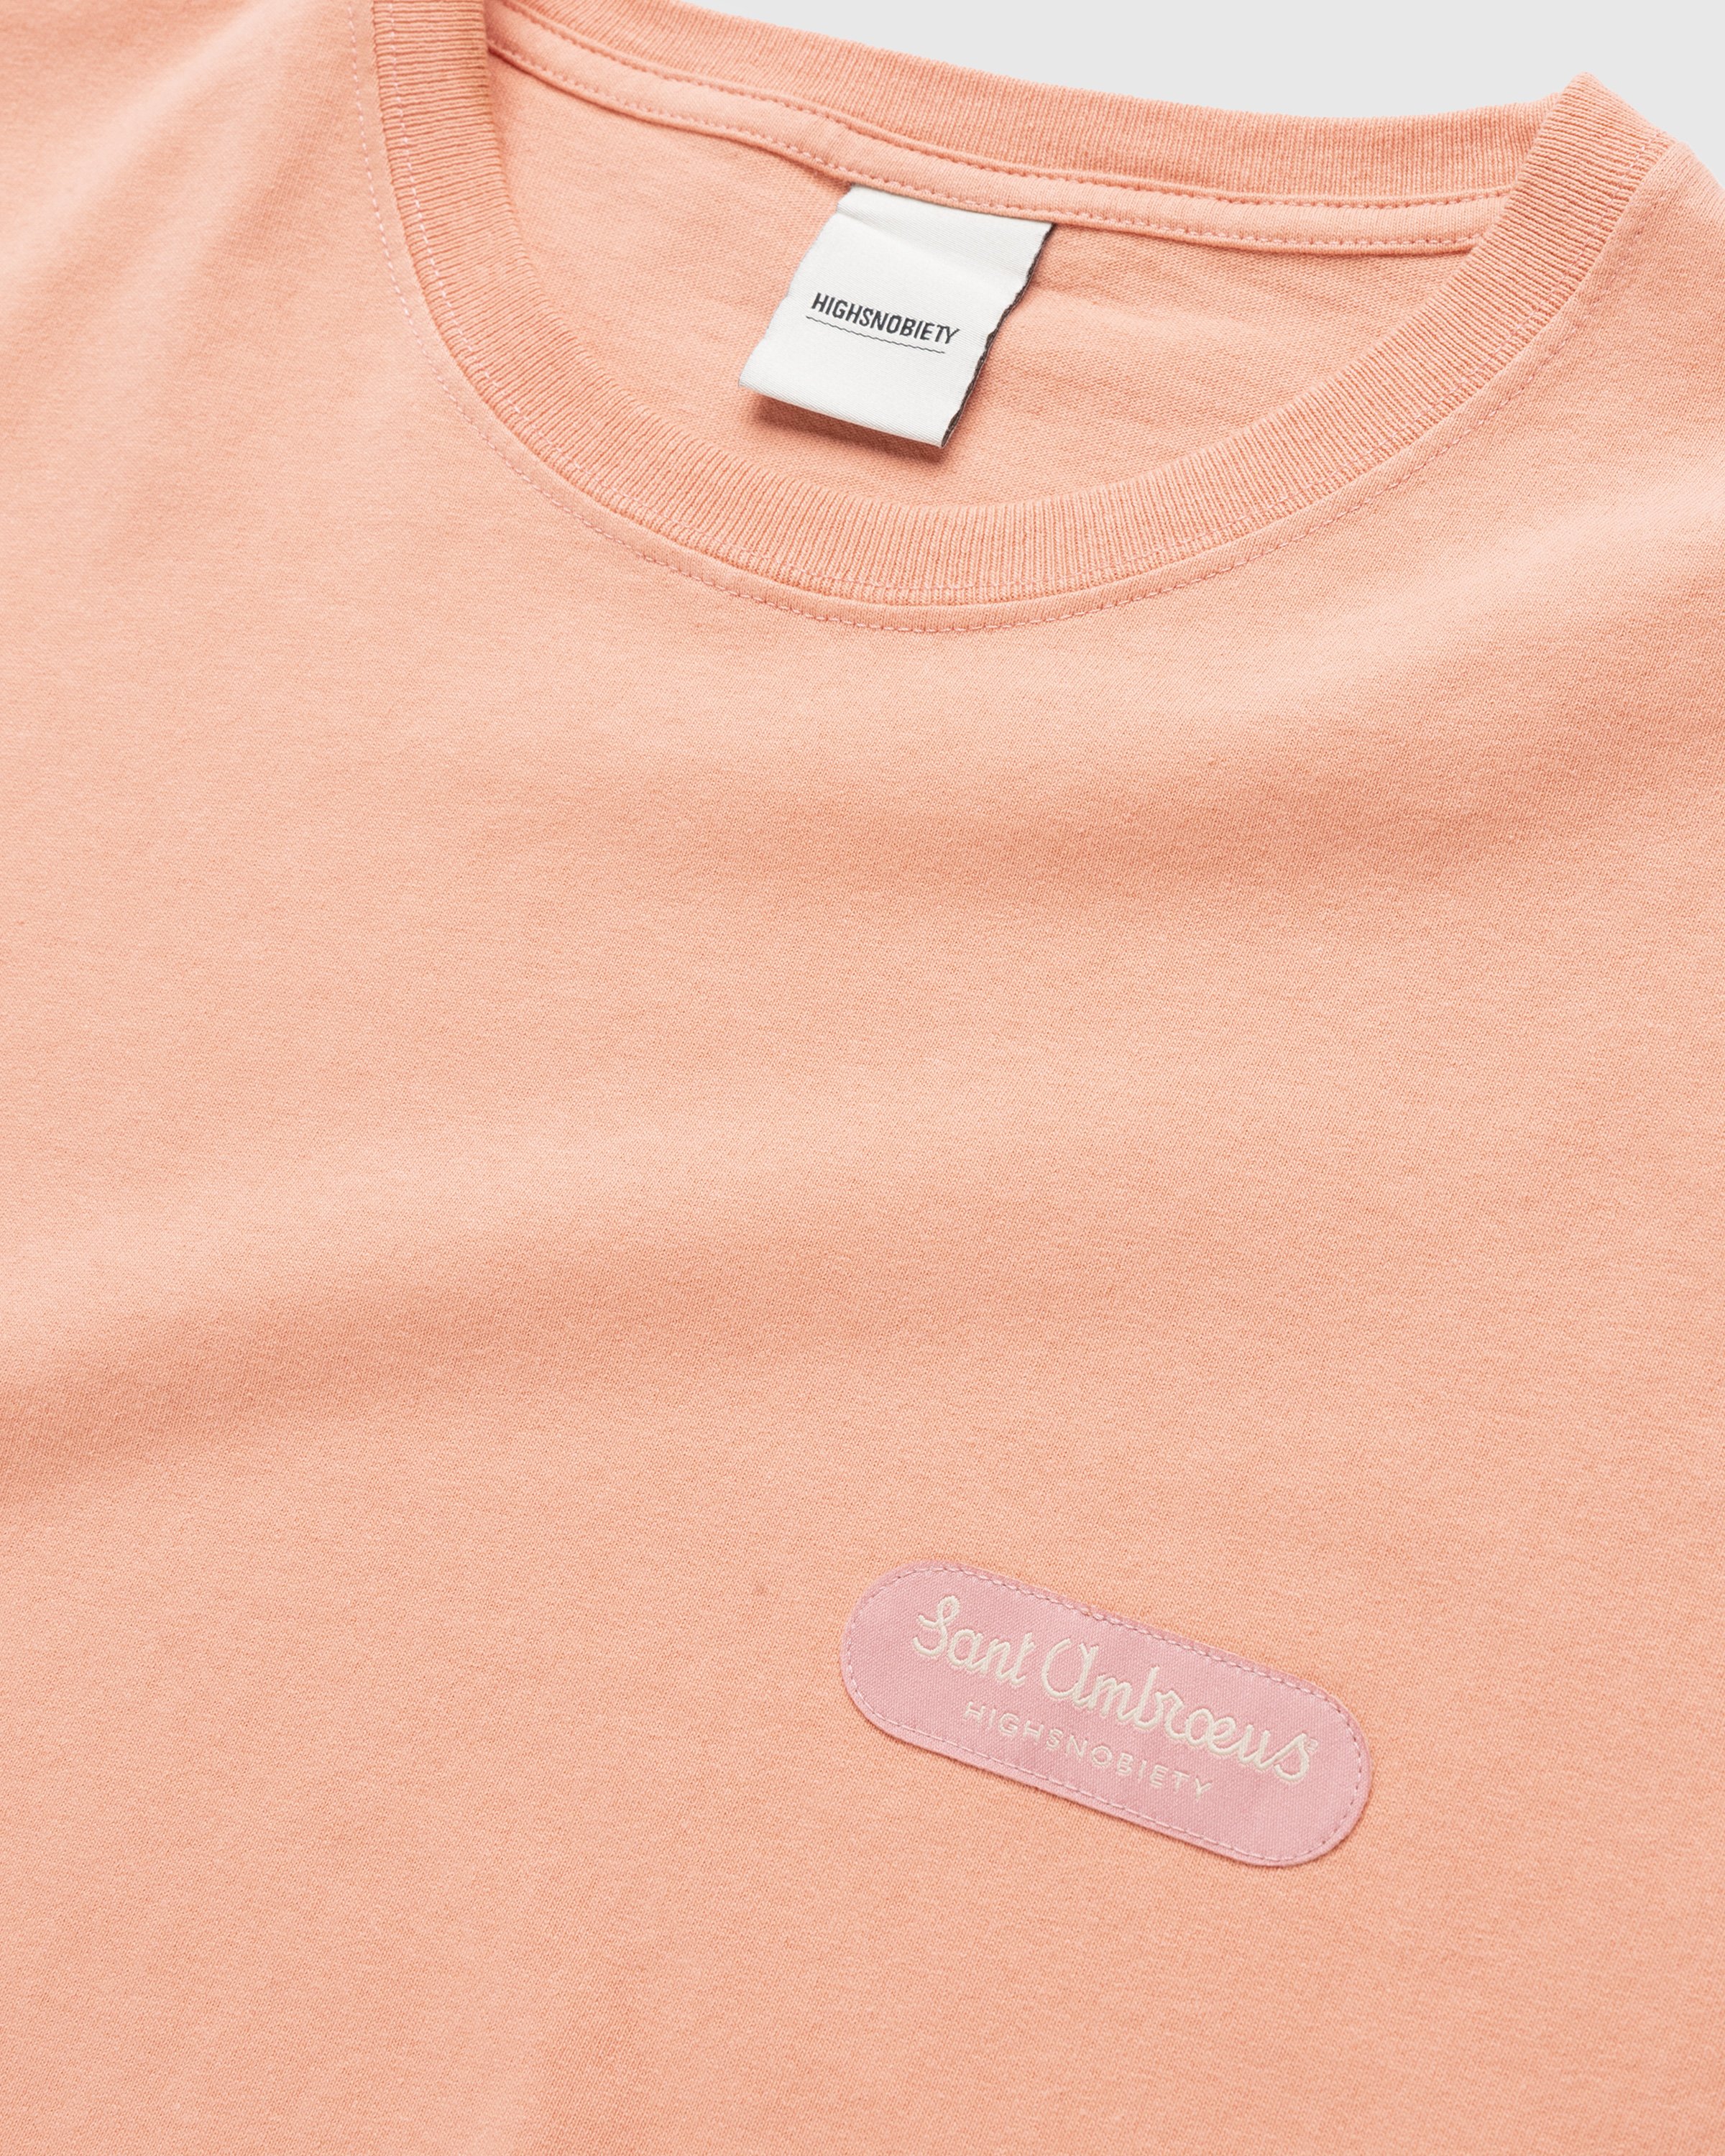 Highsnobiety x Sant Ambroeus - Pink T-Shirt - Clothing - Pink - Image 6